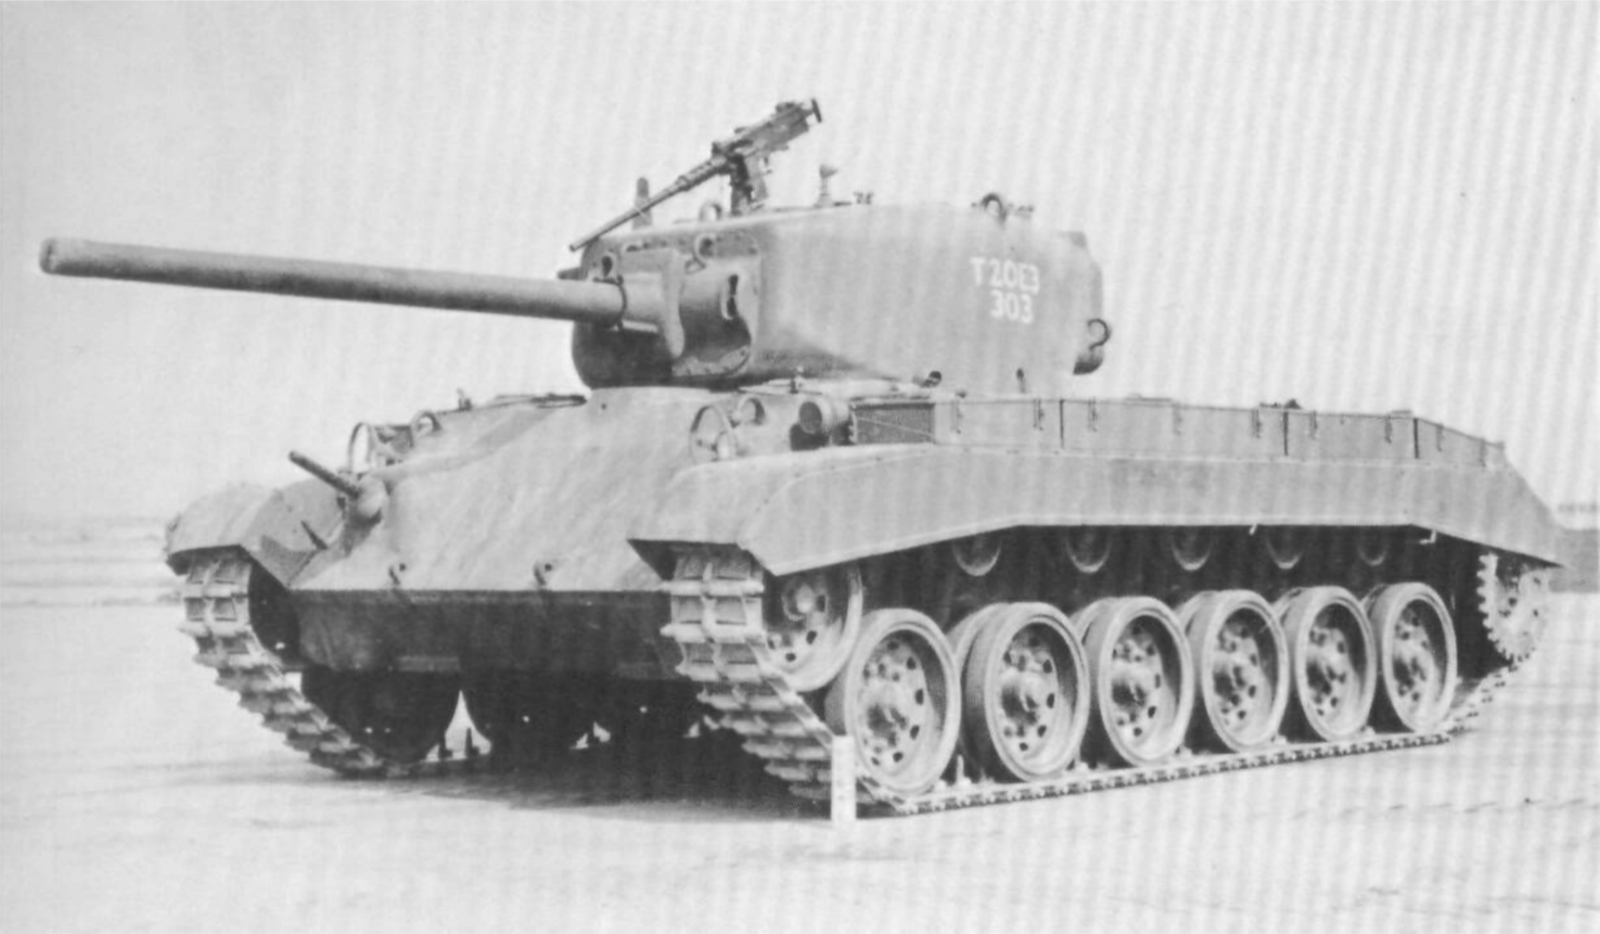 T20 танк. Т-20 танк. Т20 США. М 20 танк США.